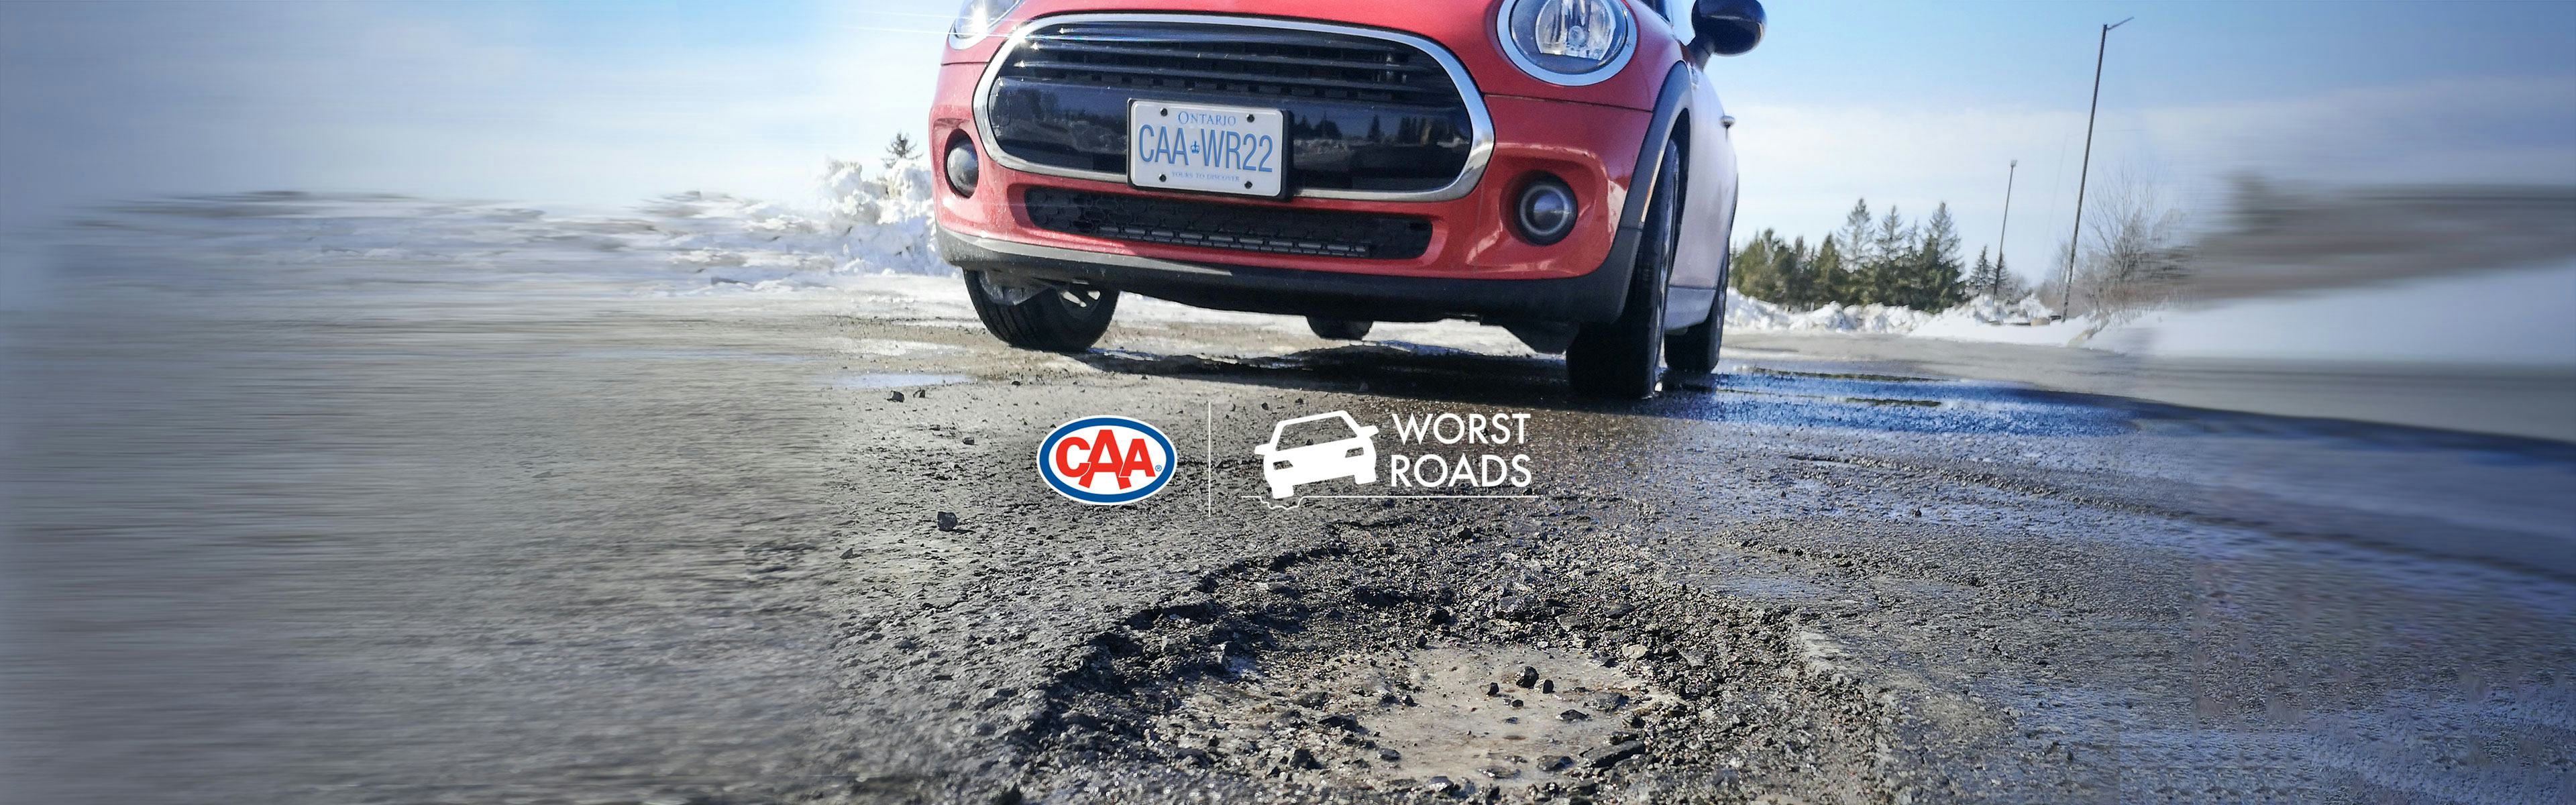 CAA's Worst Roads 2022 - Red car parked on an Ontario street near a pothole.